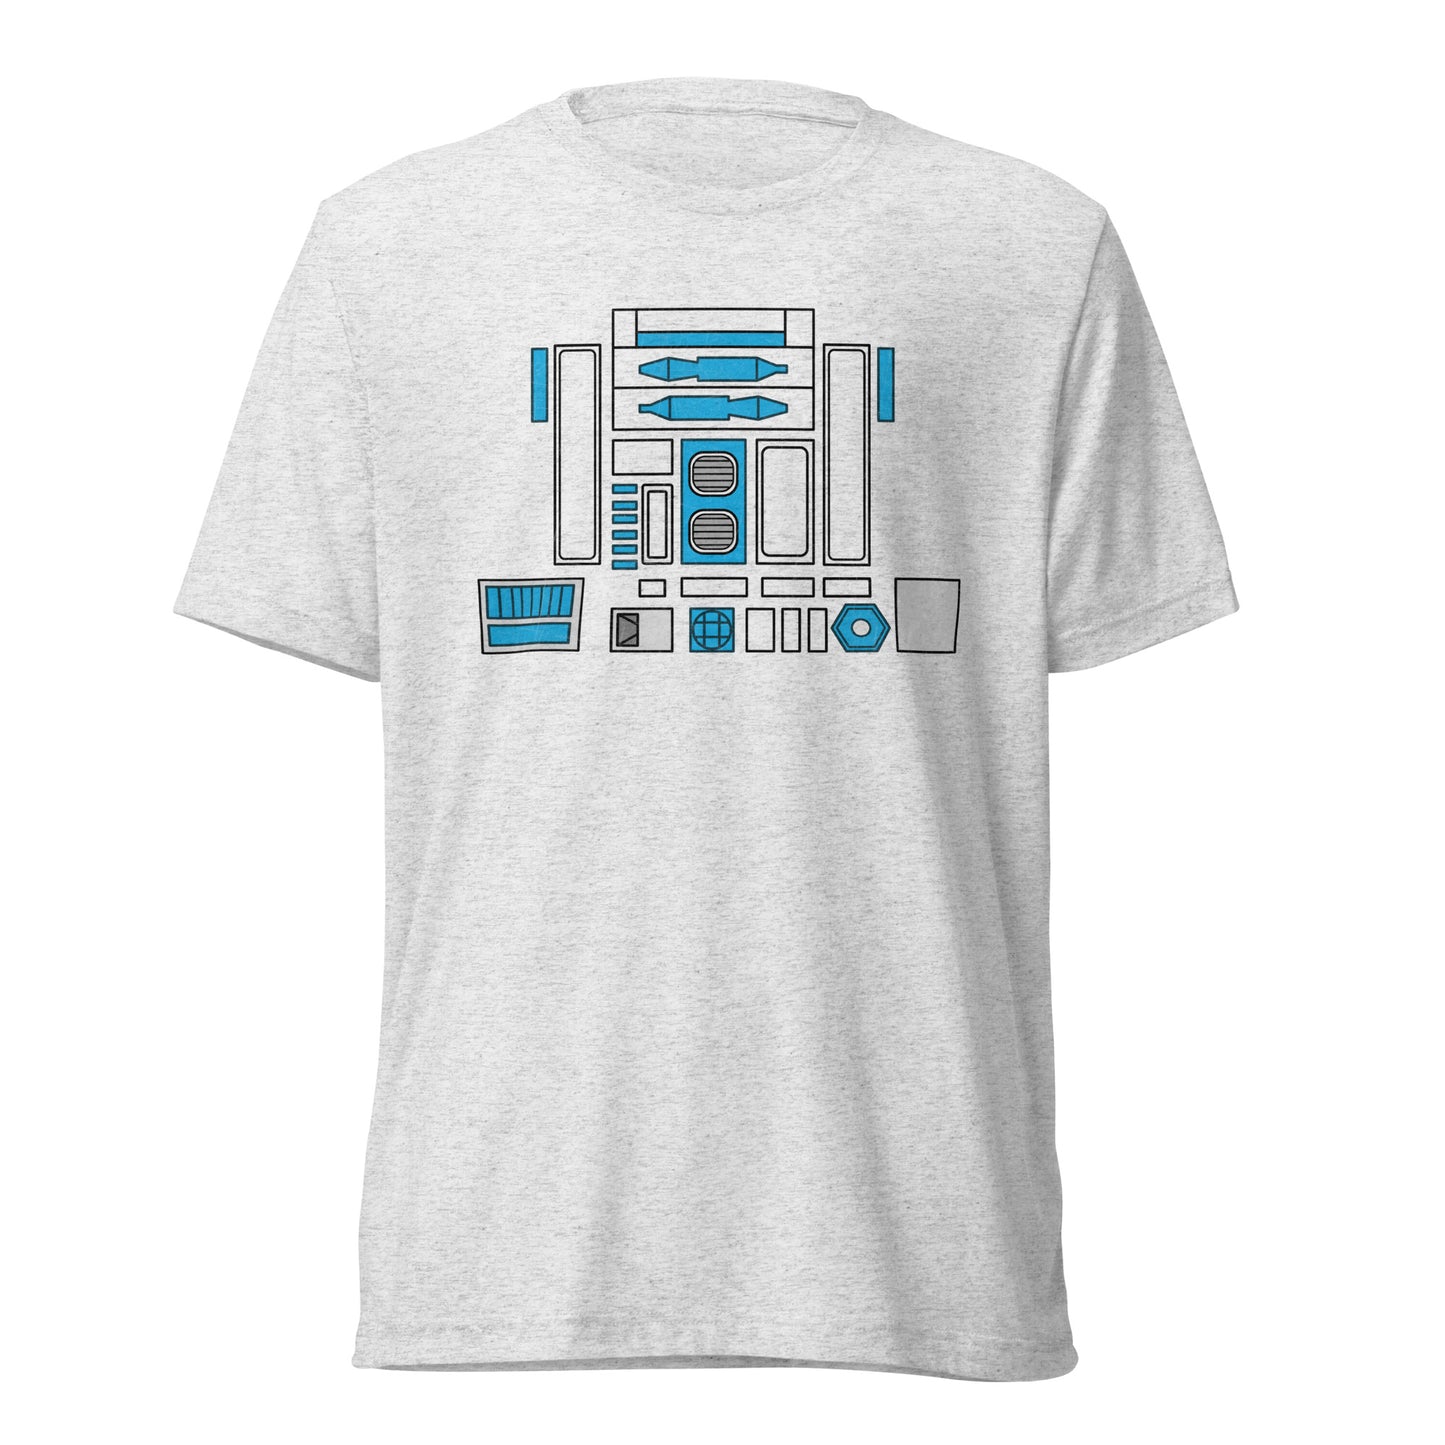 R2-D2 Vintage Decal t-shirt